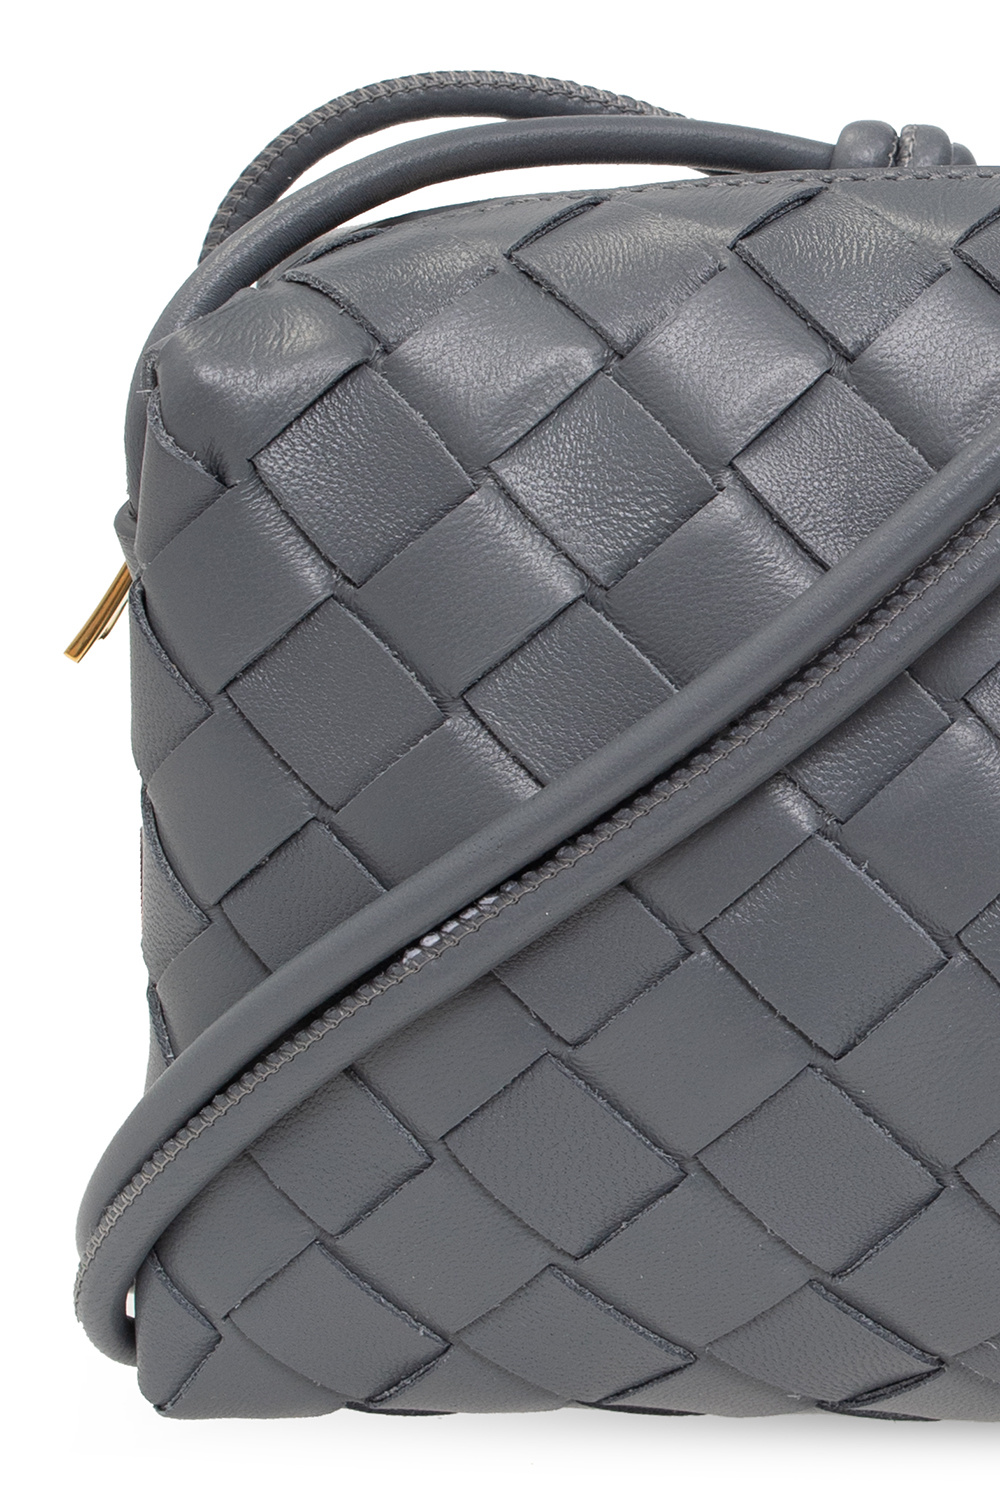 Bottega Veneta ‘Loop Mini’ Shoulder Bag Women's Grey